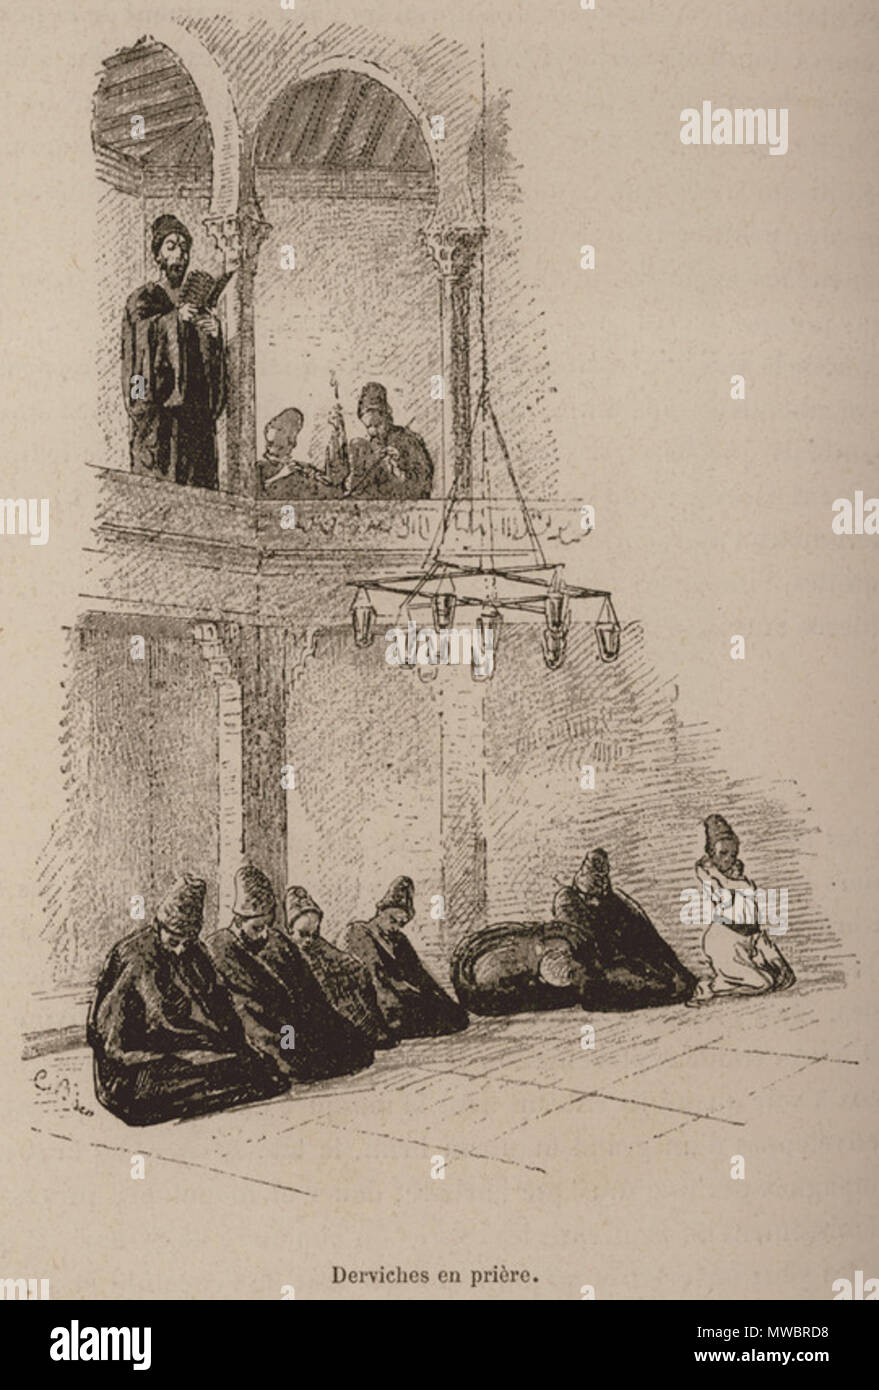 159 Derviches en prière - De Amicis Edmondo - 1883 Stock Photo